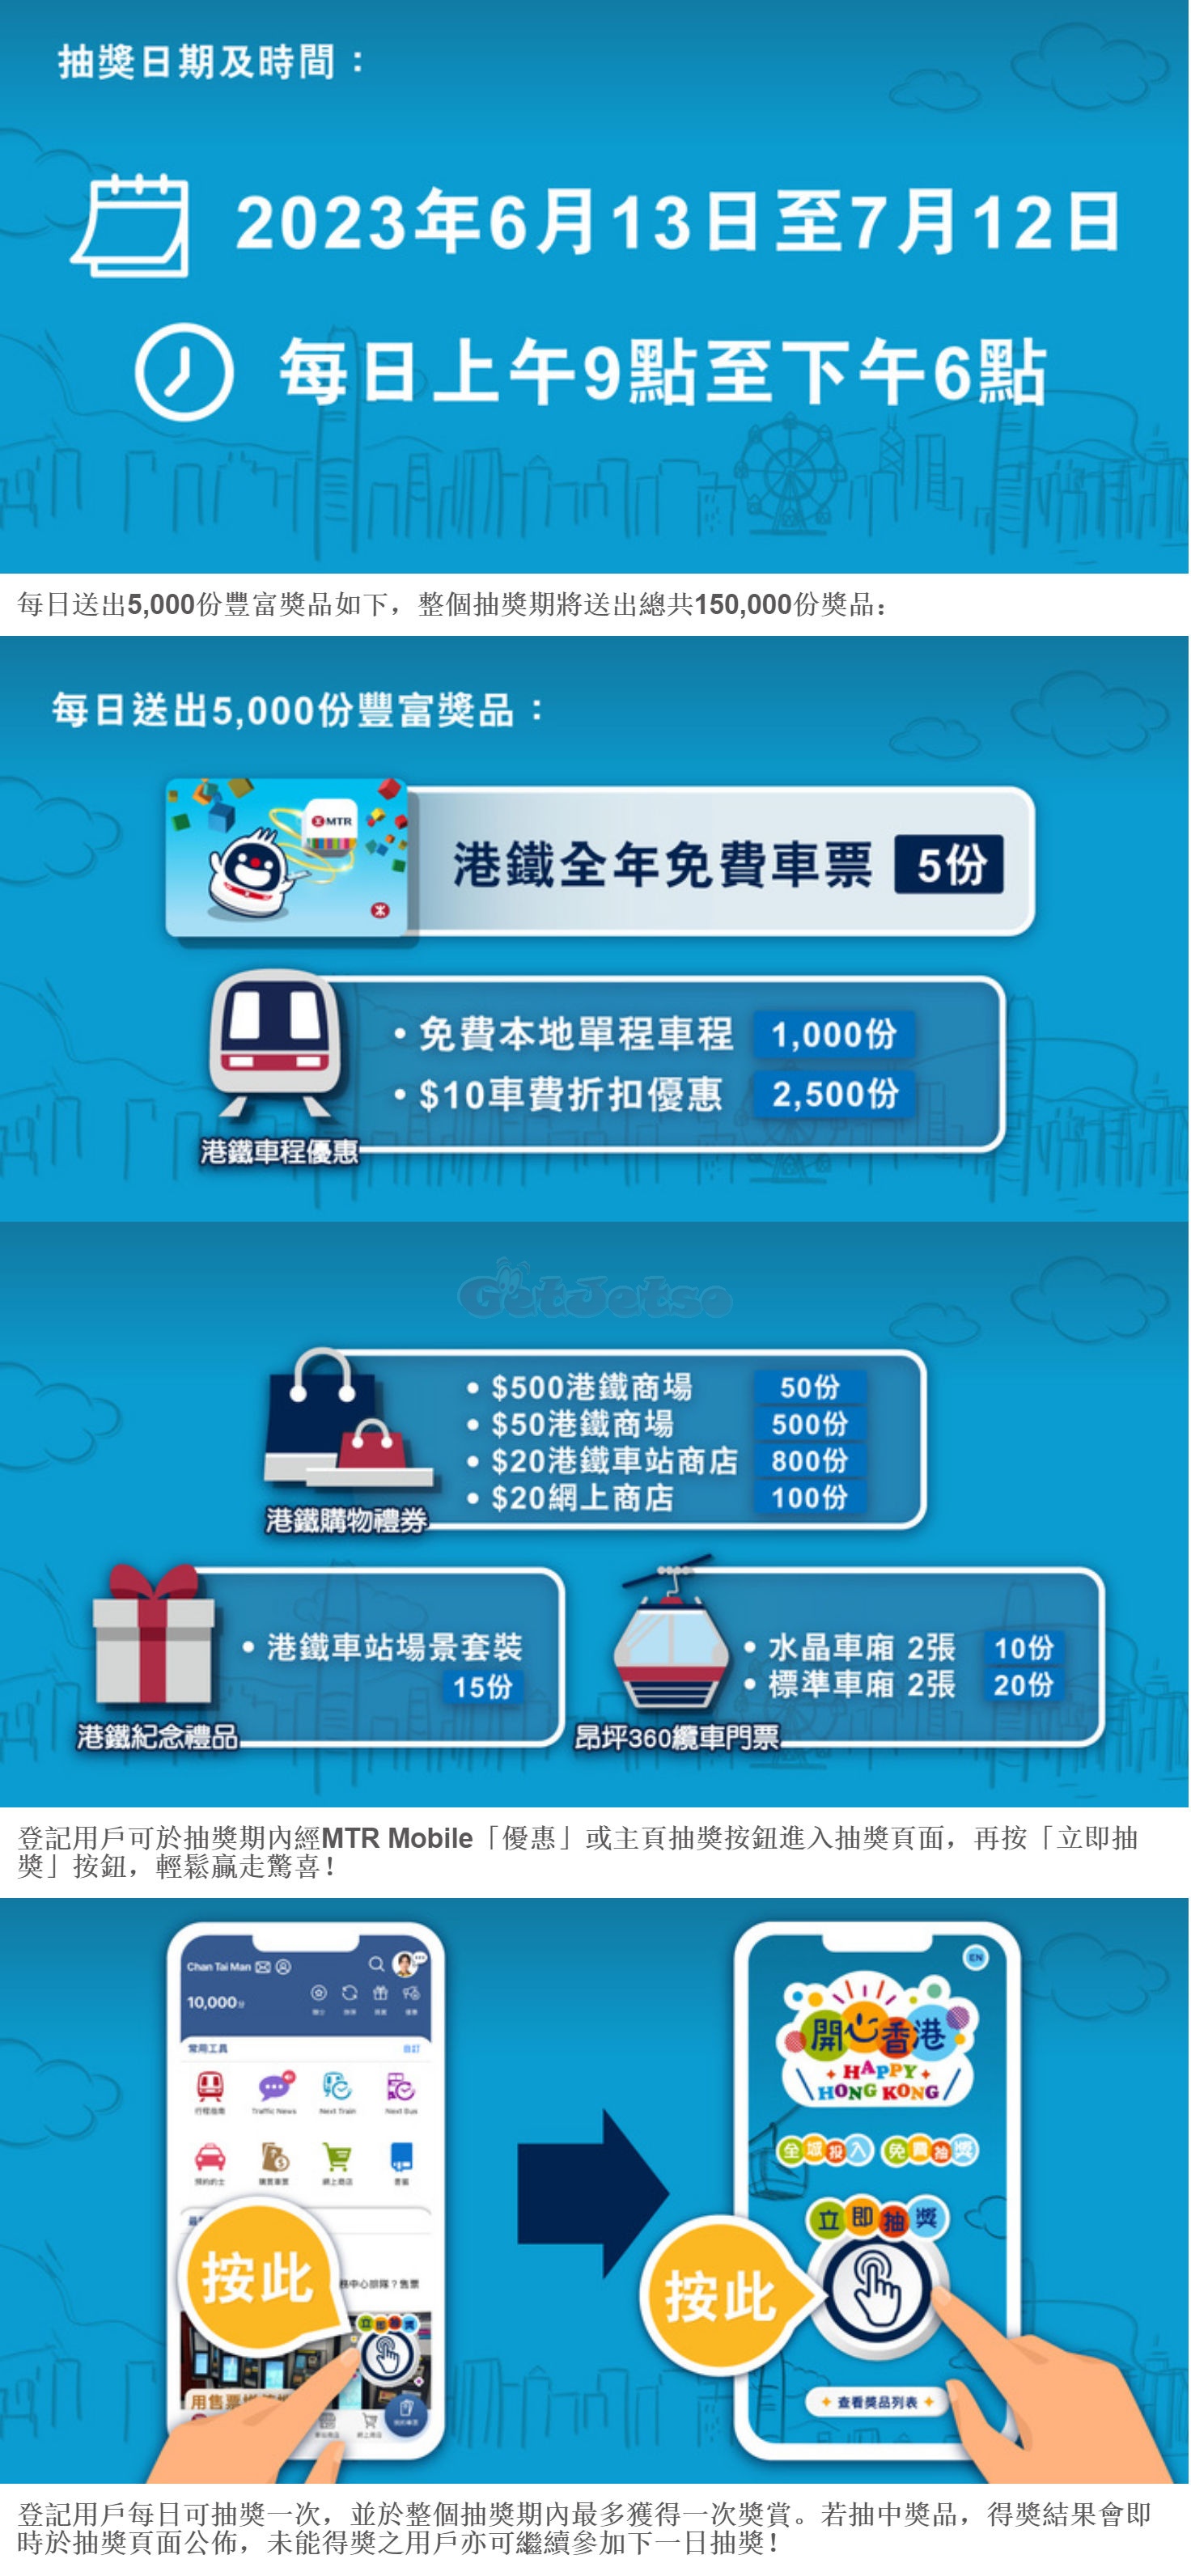 MTR Mobile 港鐵一連30日每日送出5,000 份獎品，包括全年免費車票優惠(至23年7月12日)圖片1